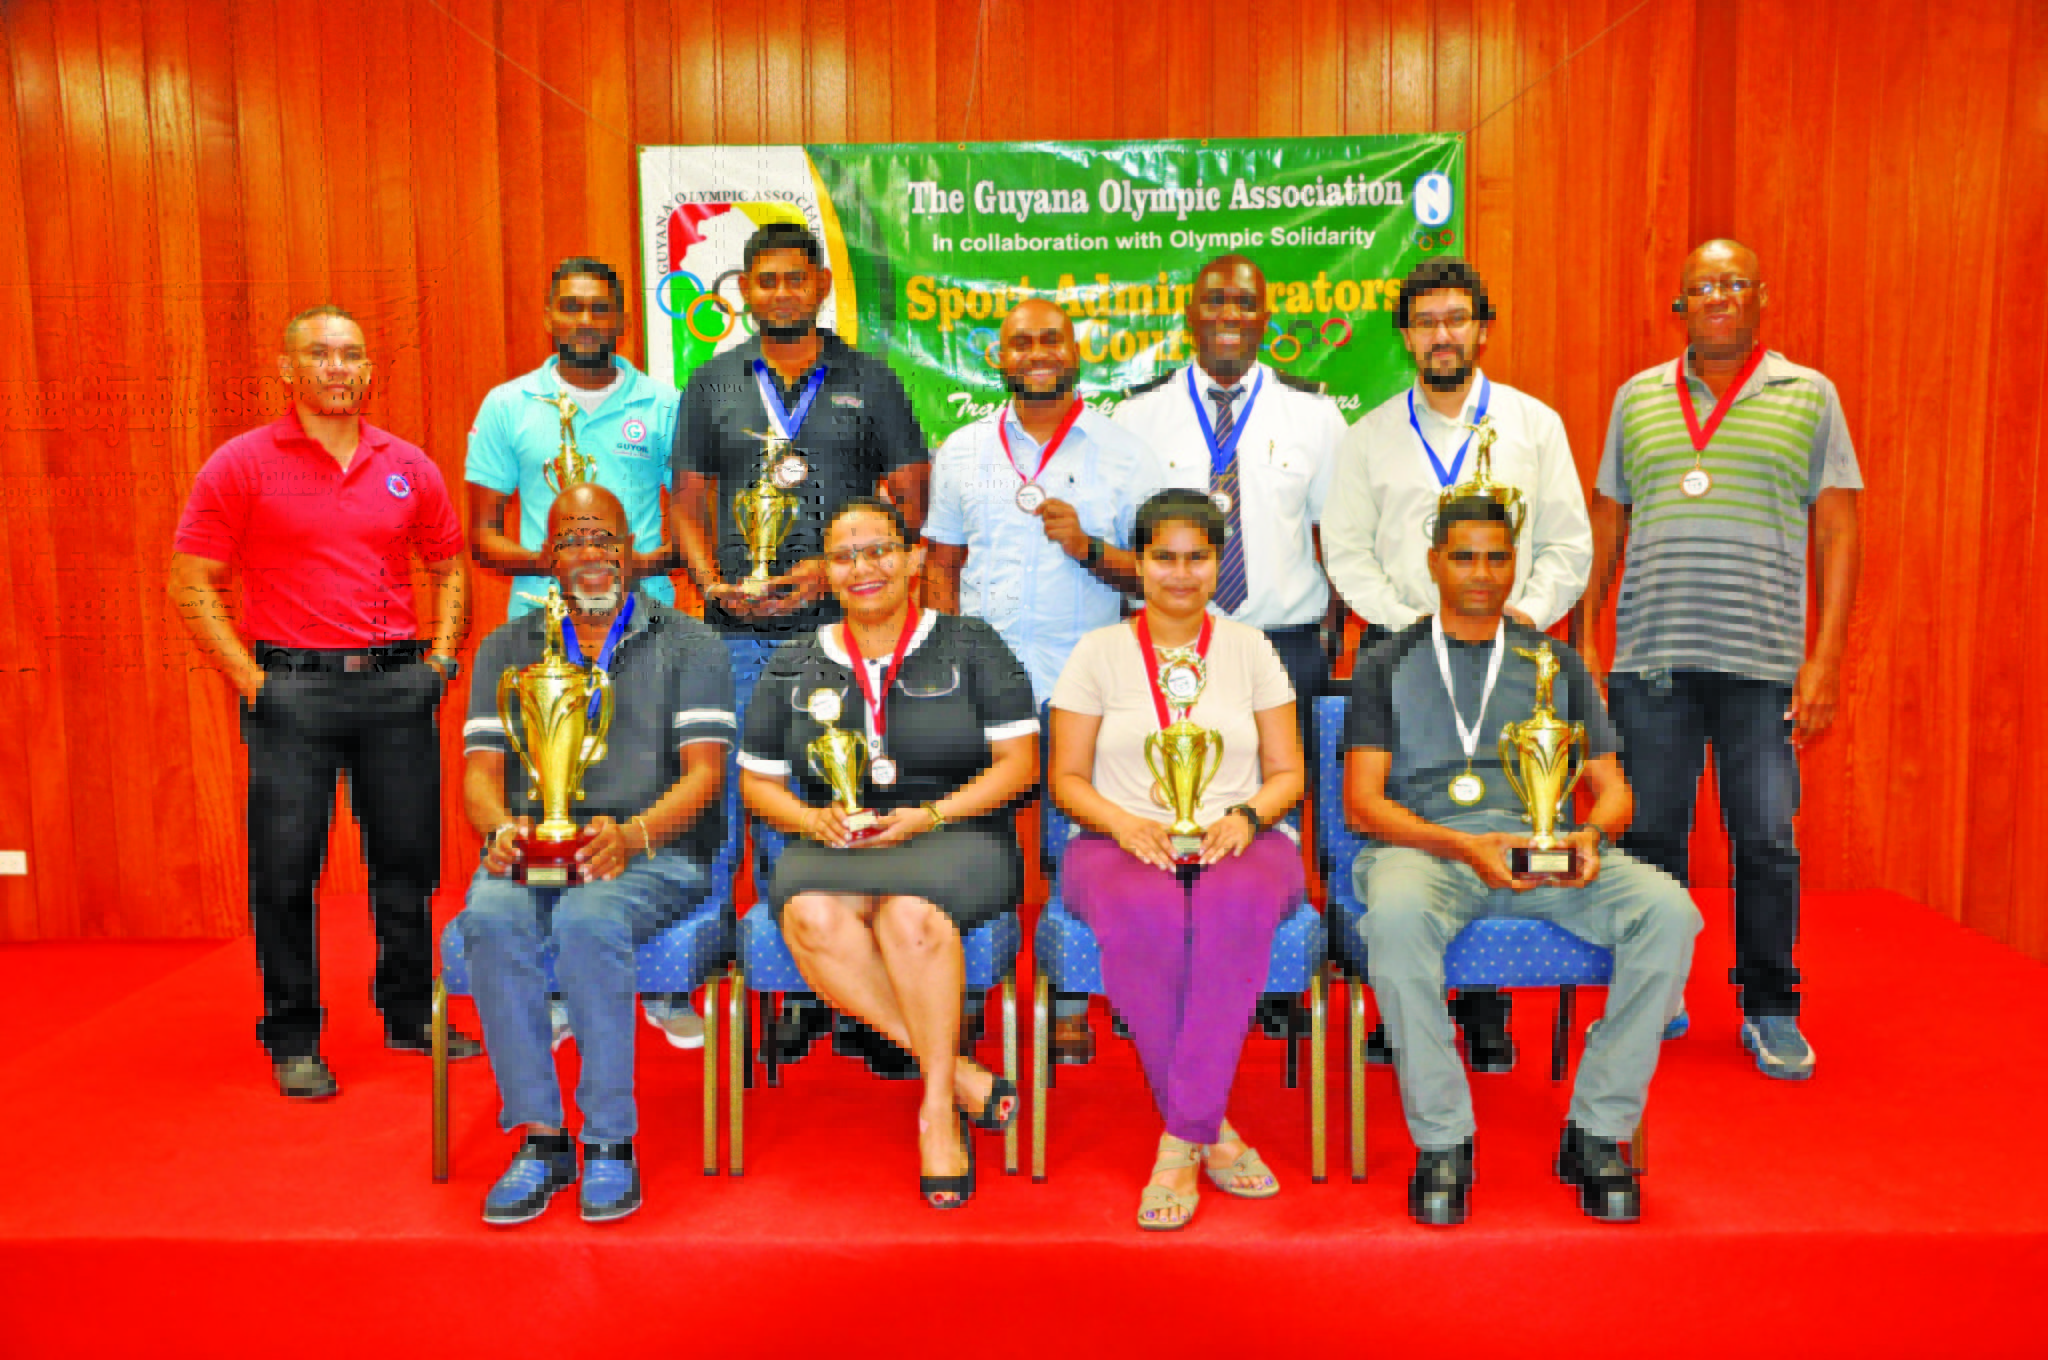 Melville is overall winner - Guyana Times